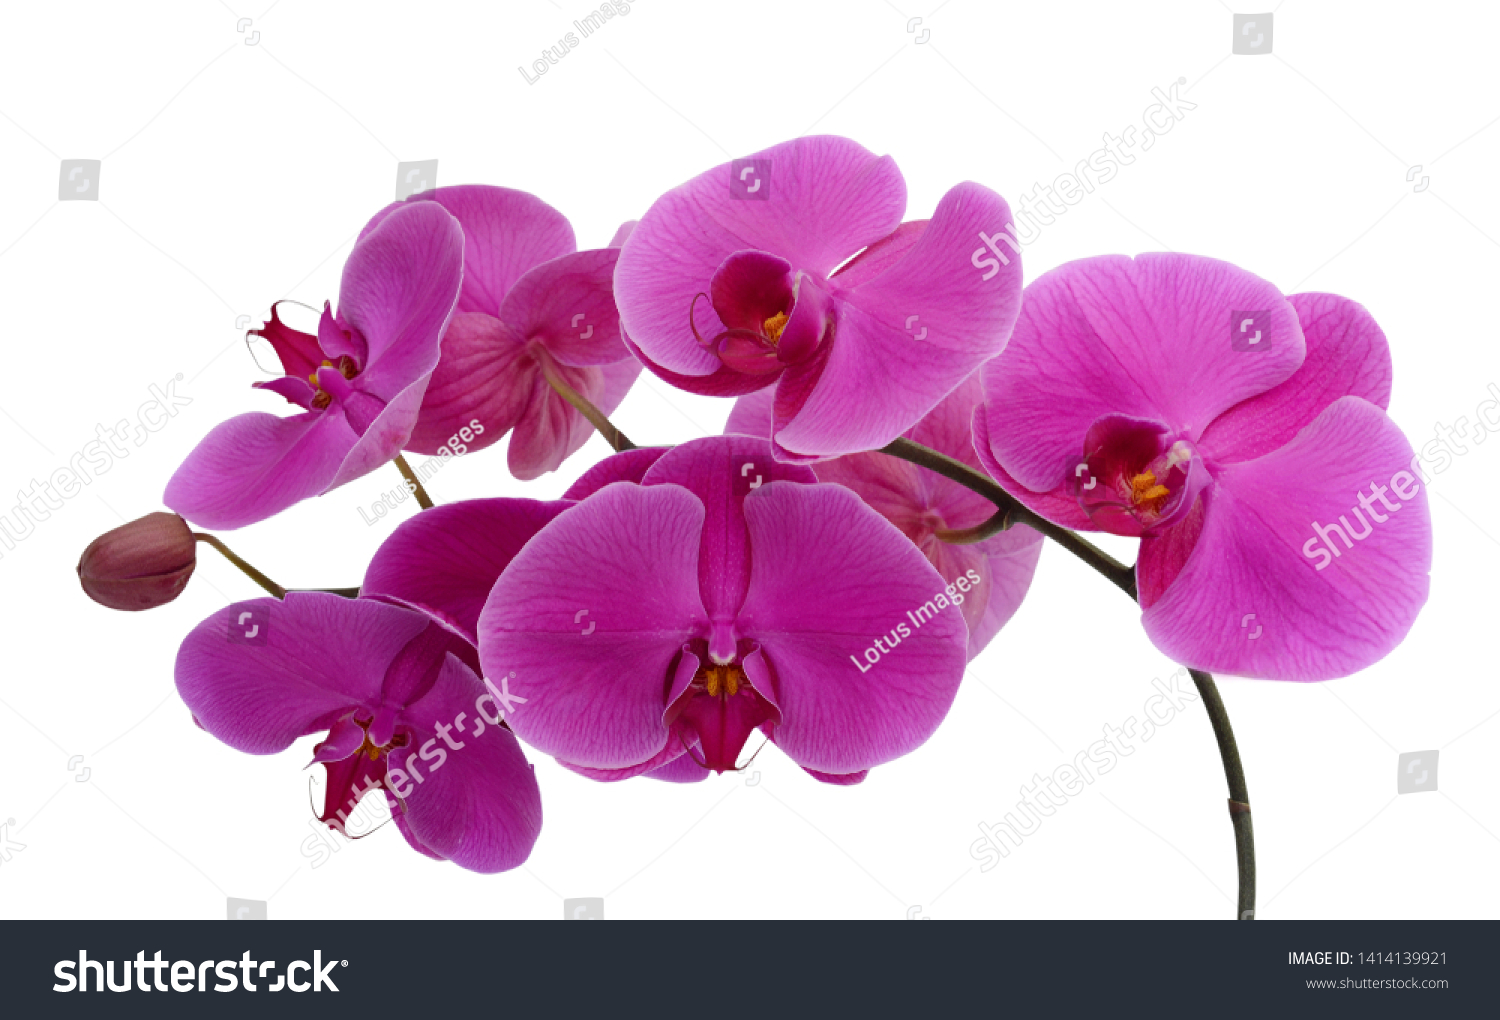 beautiful purple Phalaenopsis orchid flowers, isolated on white background #1414139921